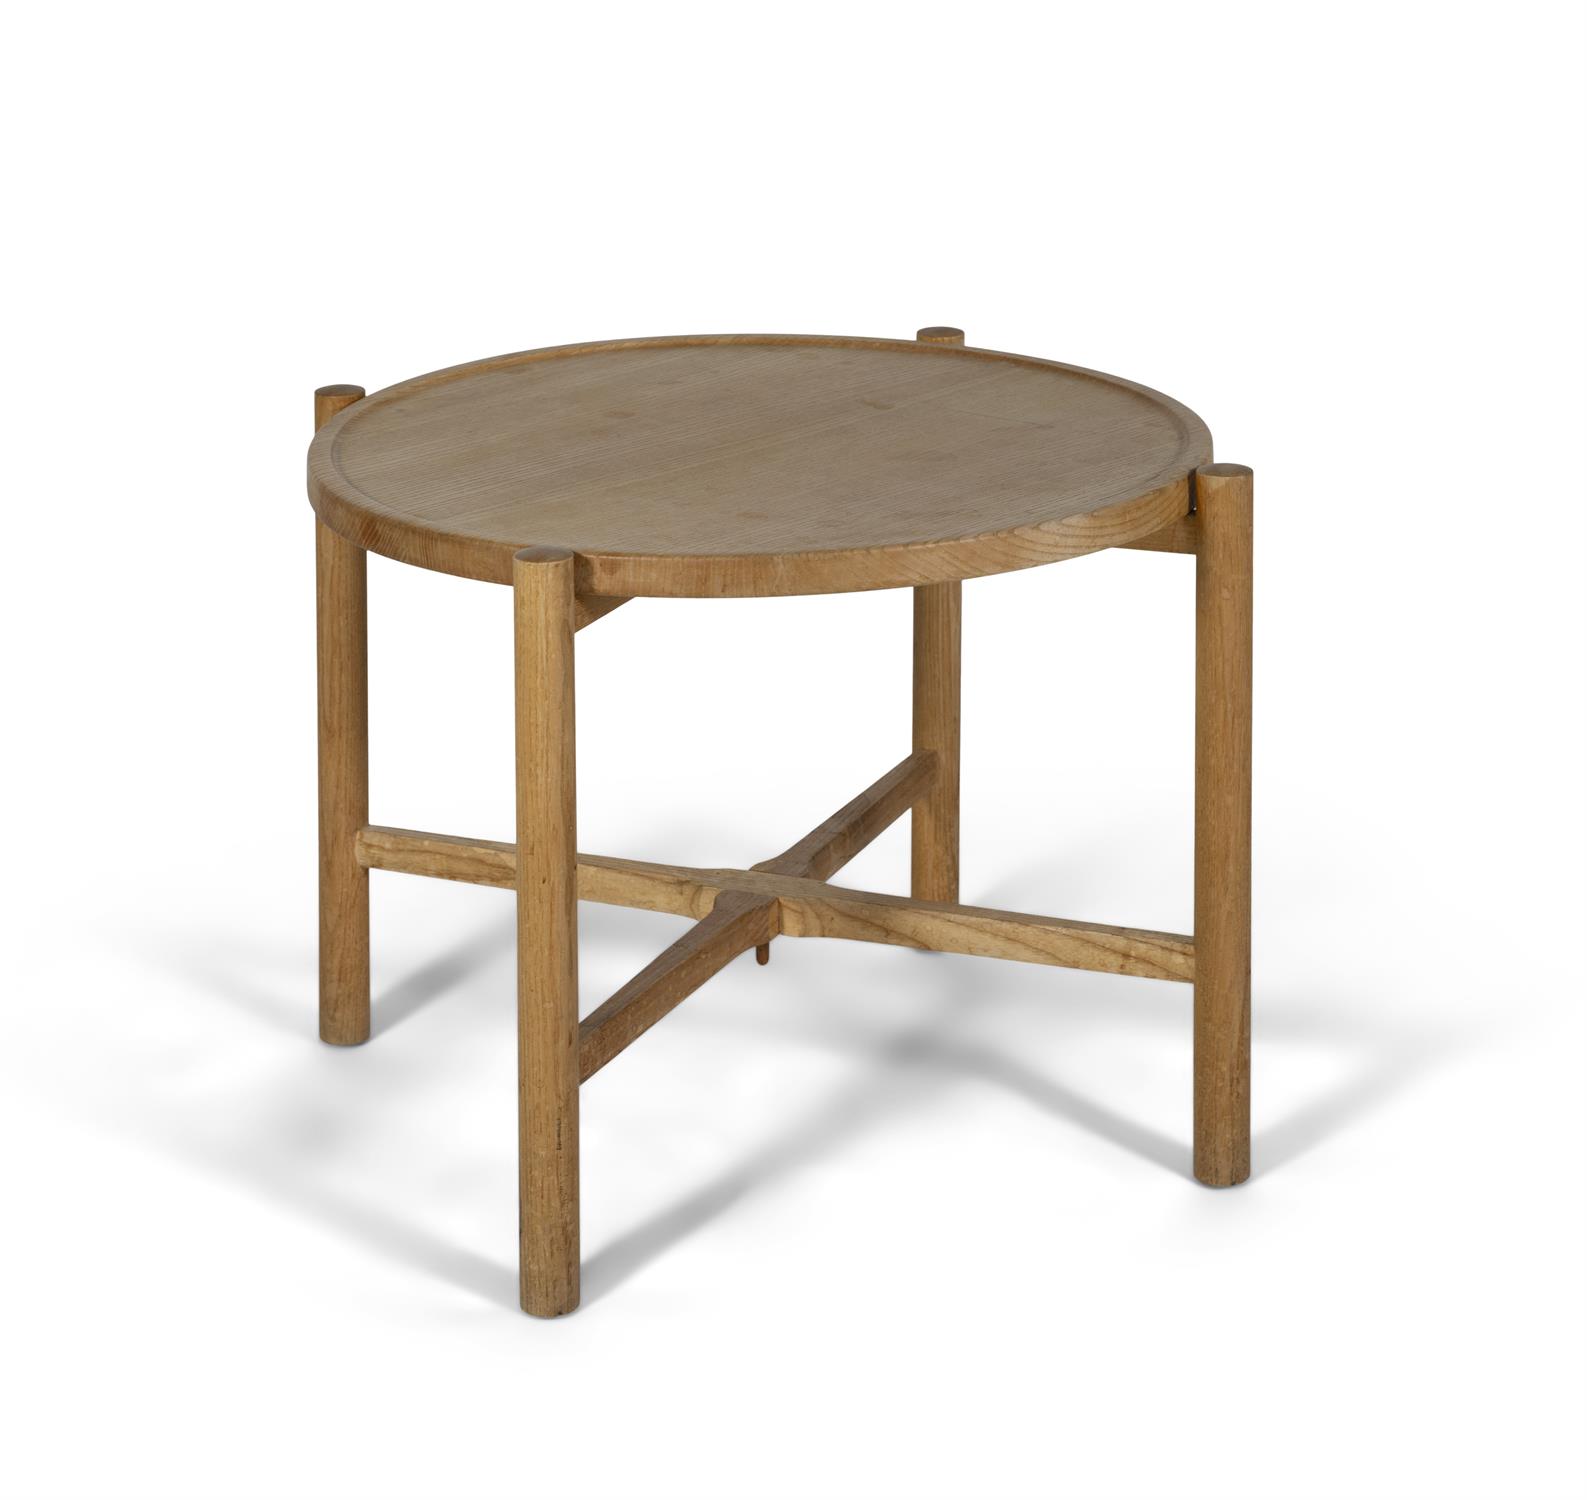 HANS WEGNER (1914-2007) An oak circular coffee table by Hans Wagner. 70 x 70 x 48cm(h)